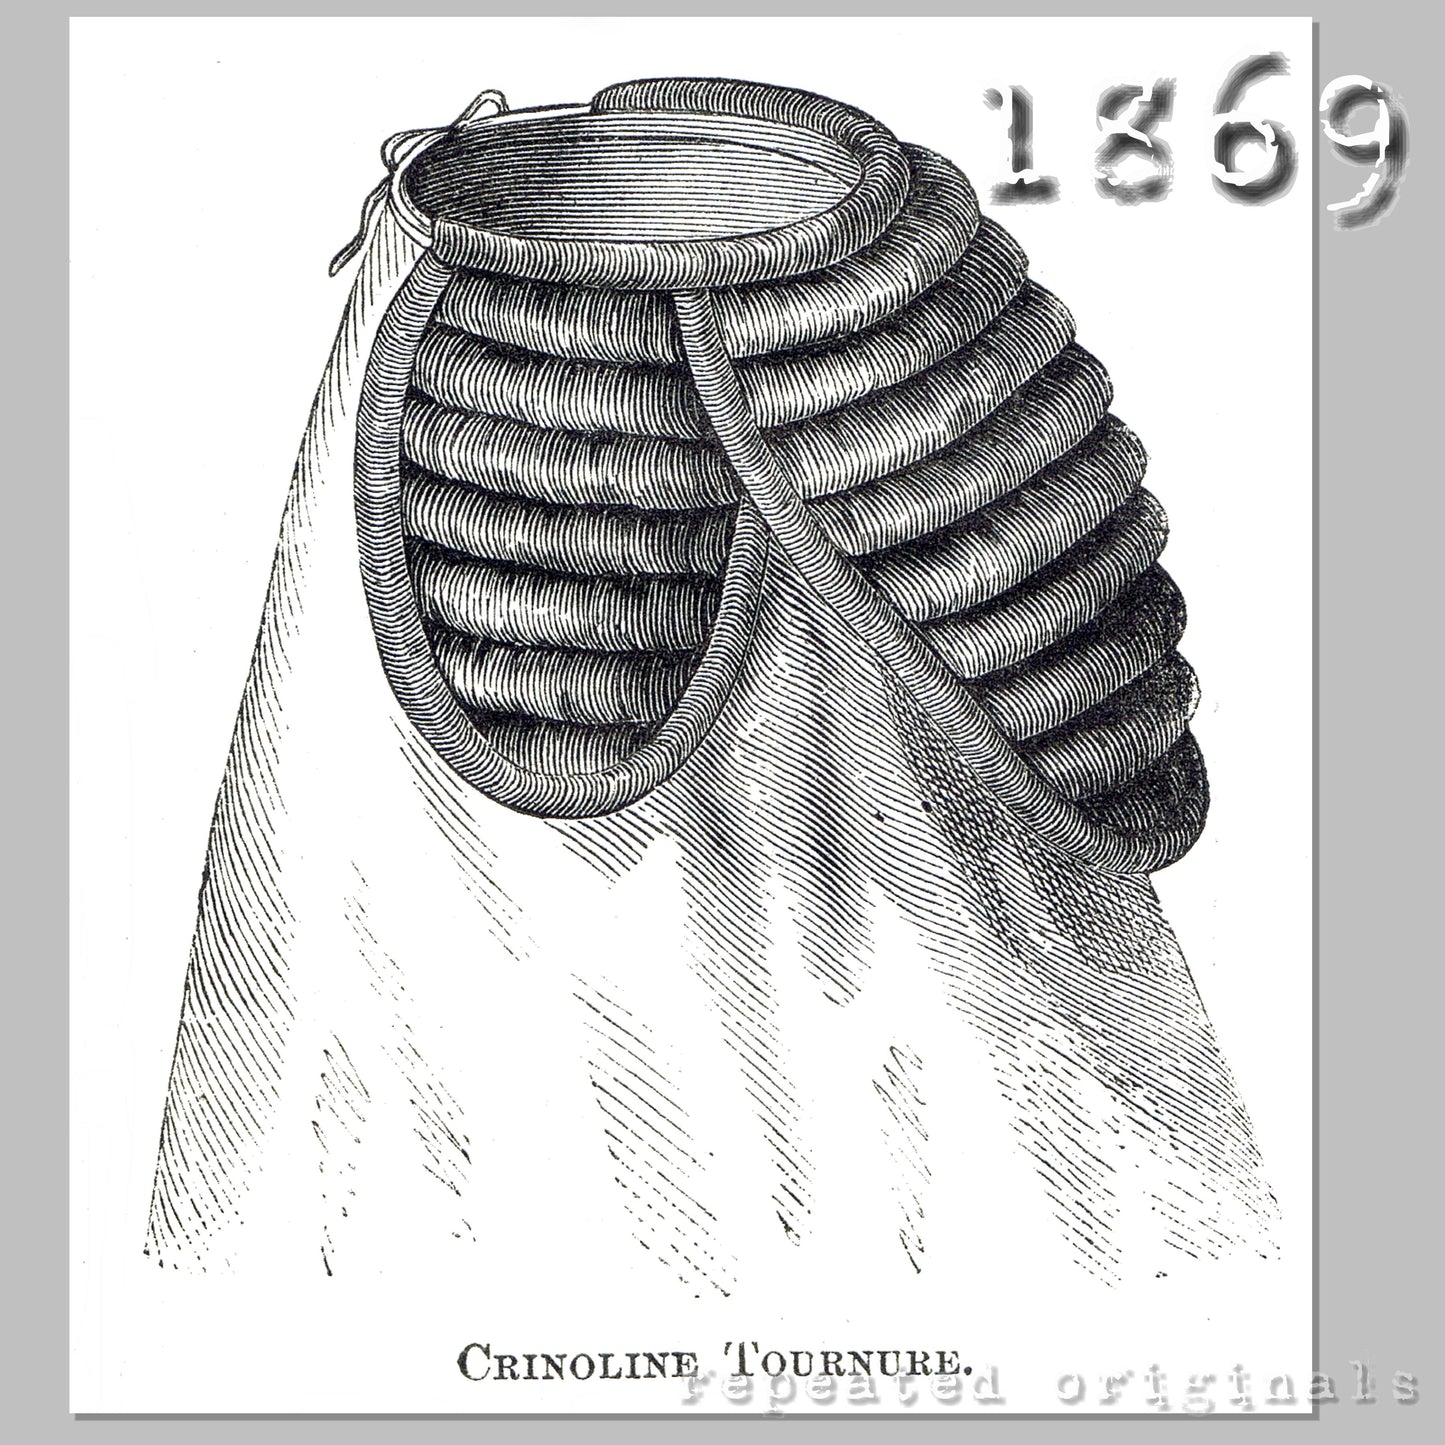 1869 Crinoline Tournure Sewing Pattern - INSTANT DOWNLOAD PDF